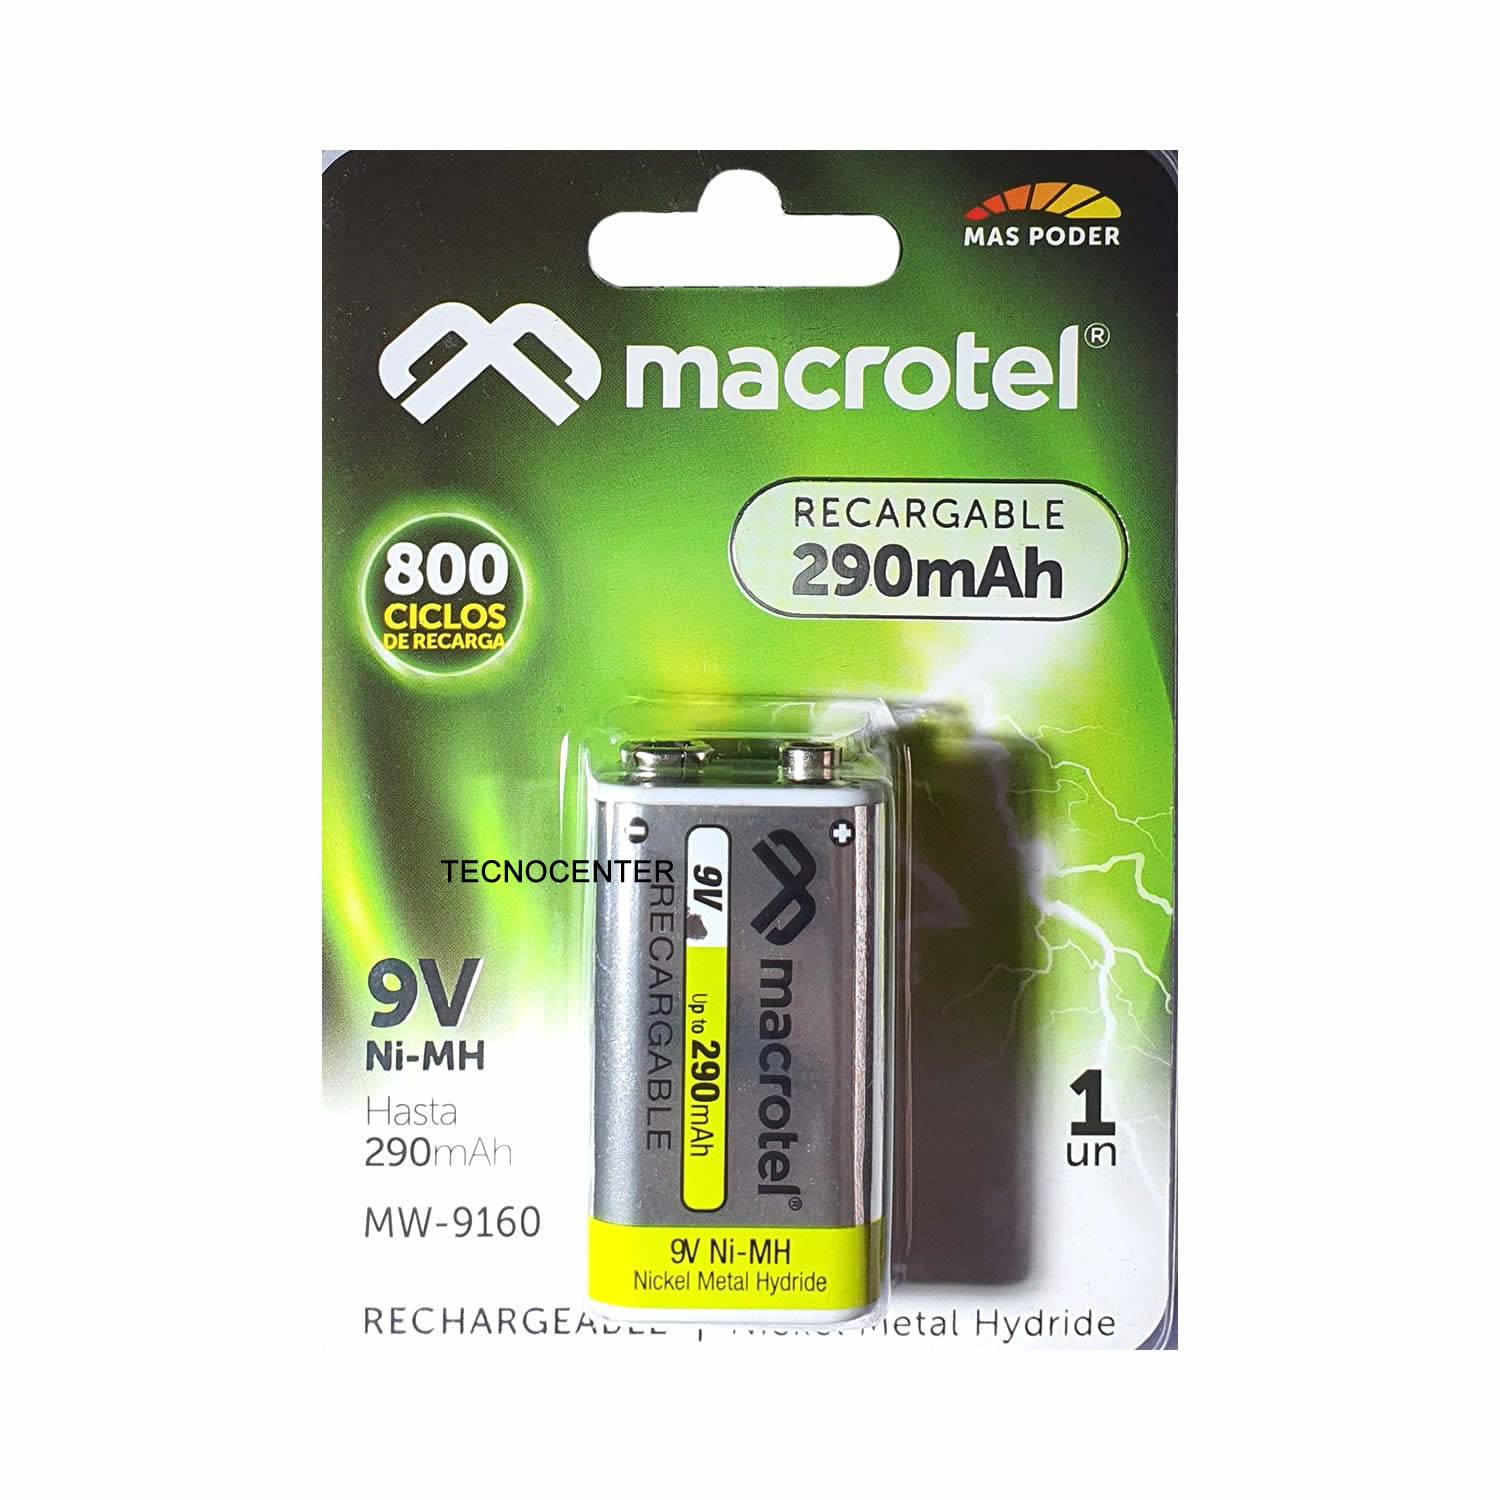 Batería Recargable 9V 800 ciclos - Macrotel 290mAh